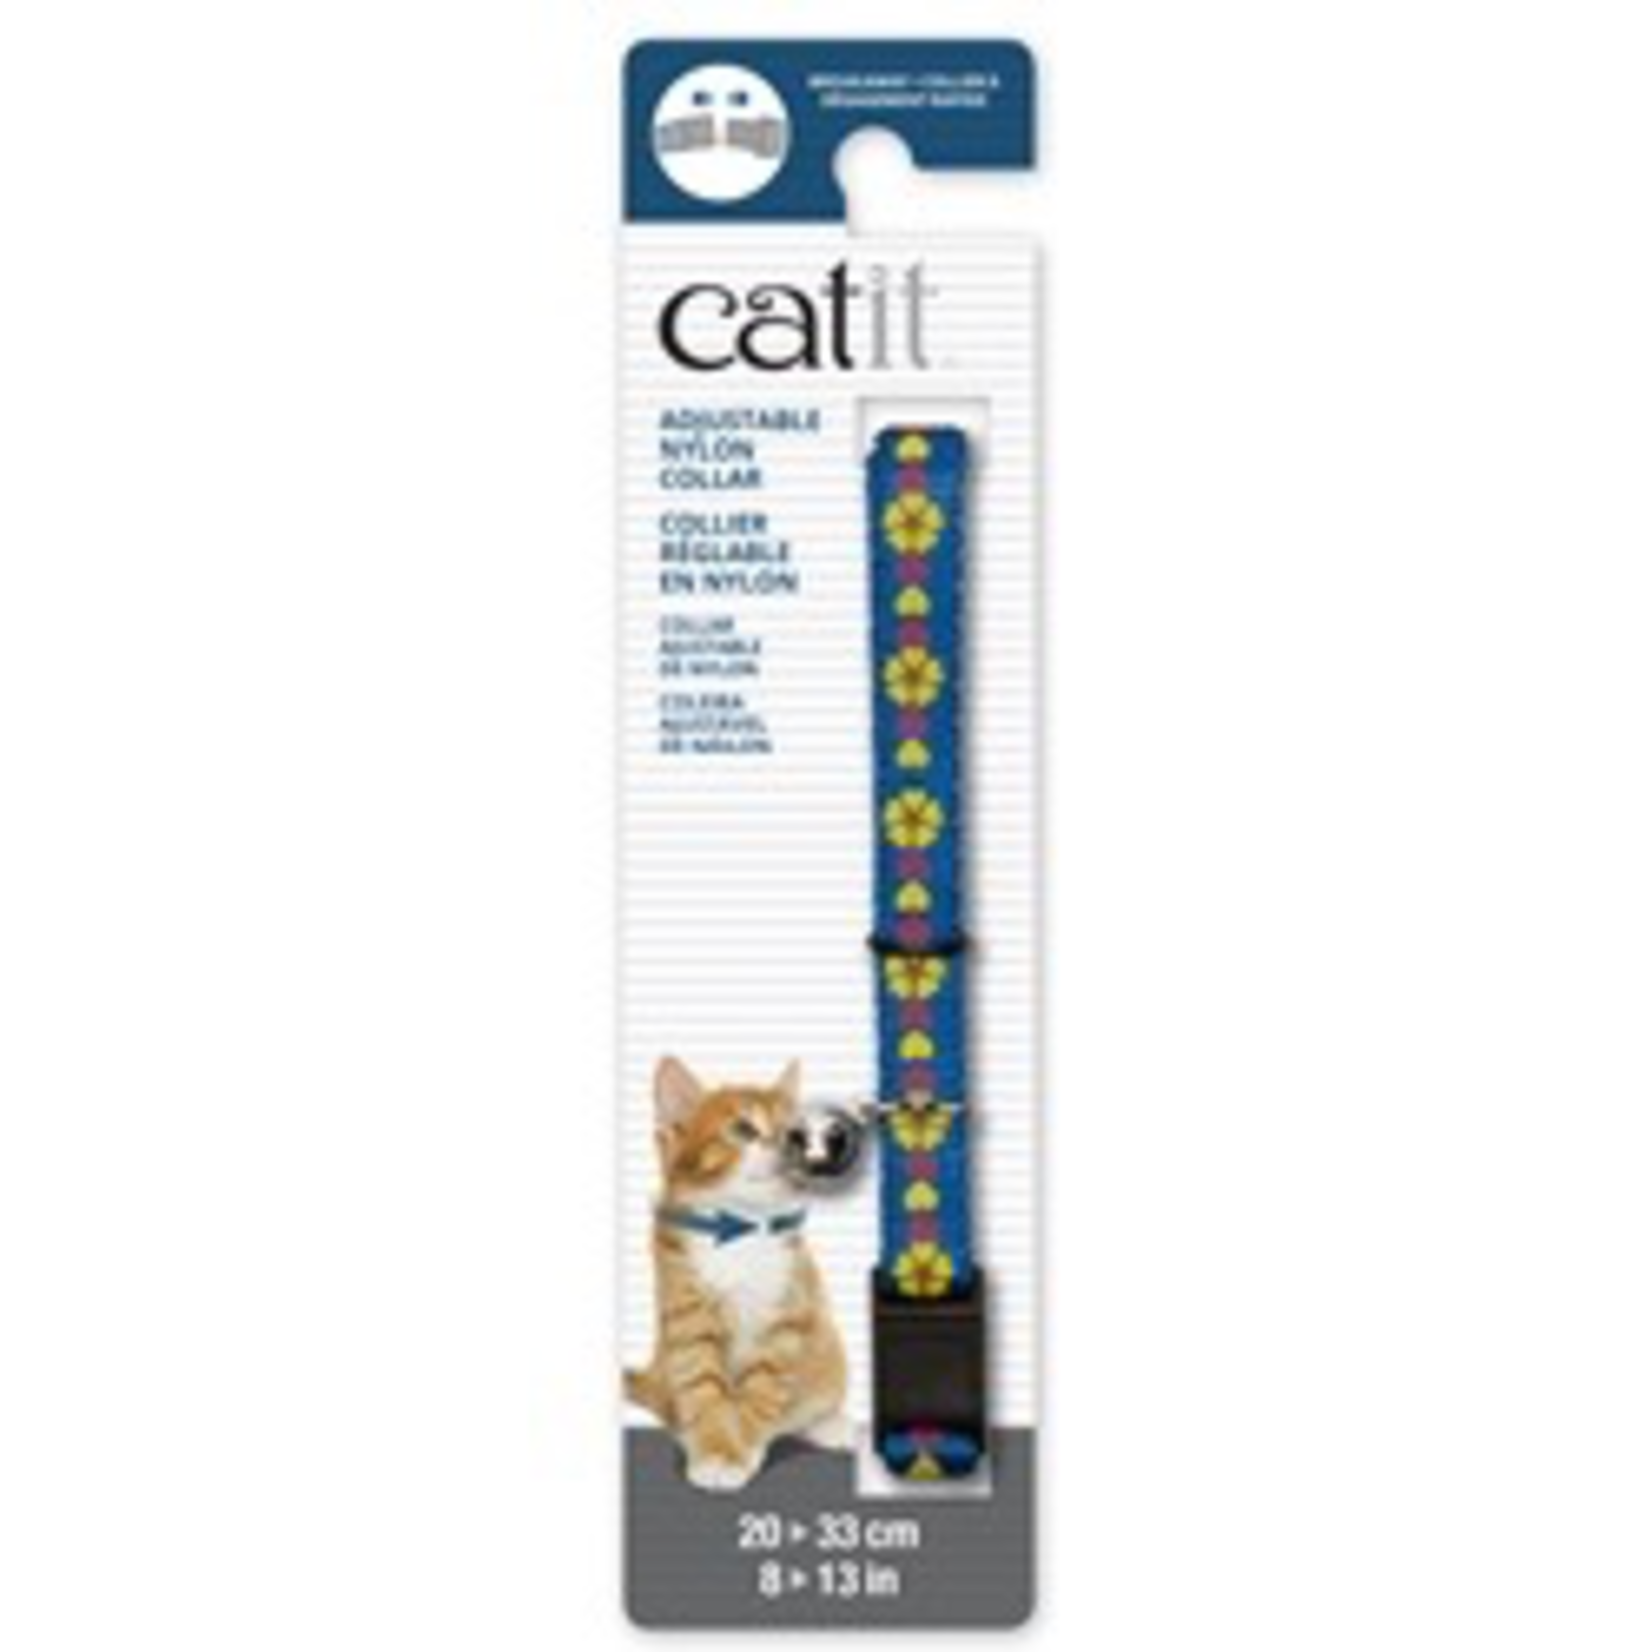 CAT IT Catit Adjustable Breakaway Nylon Collar - Blue with Flowers - 20-33 cm (8-13 in)